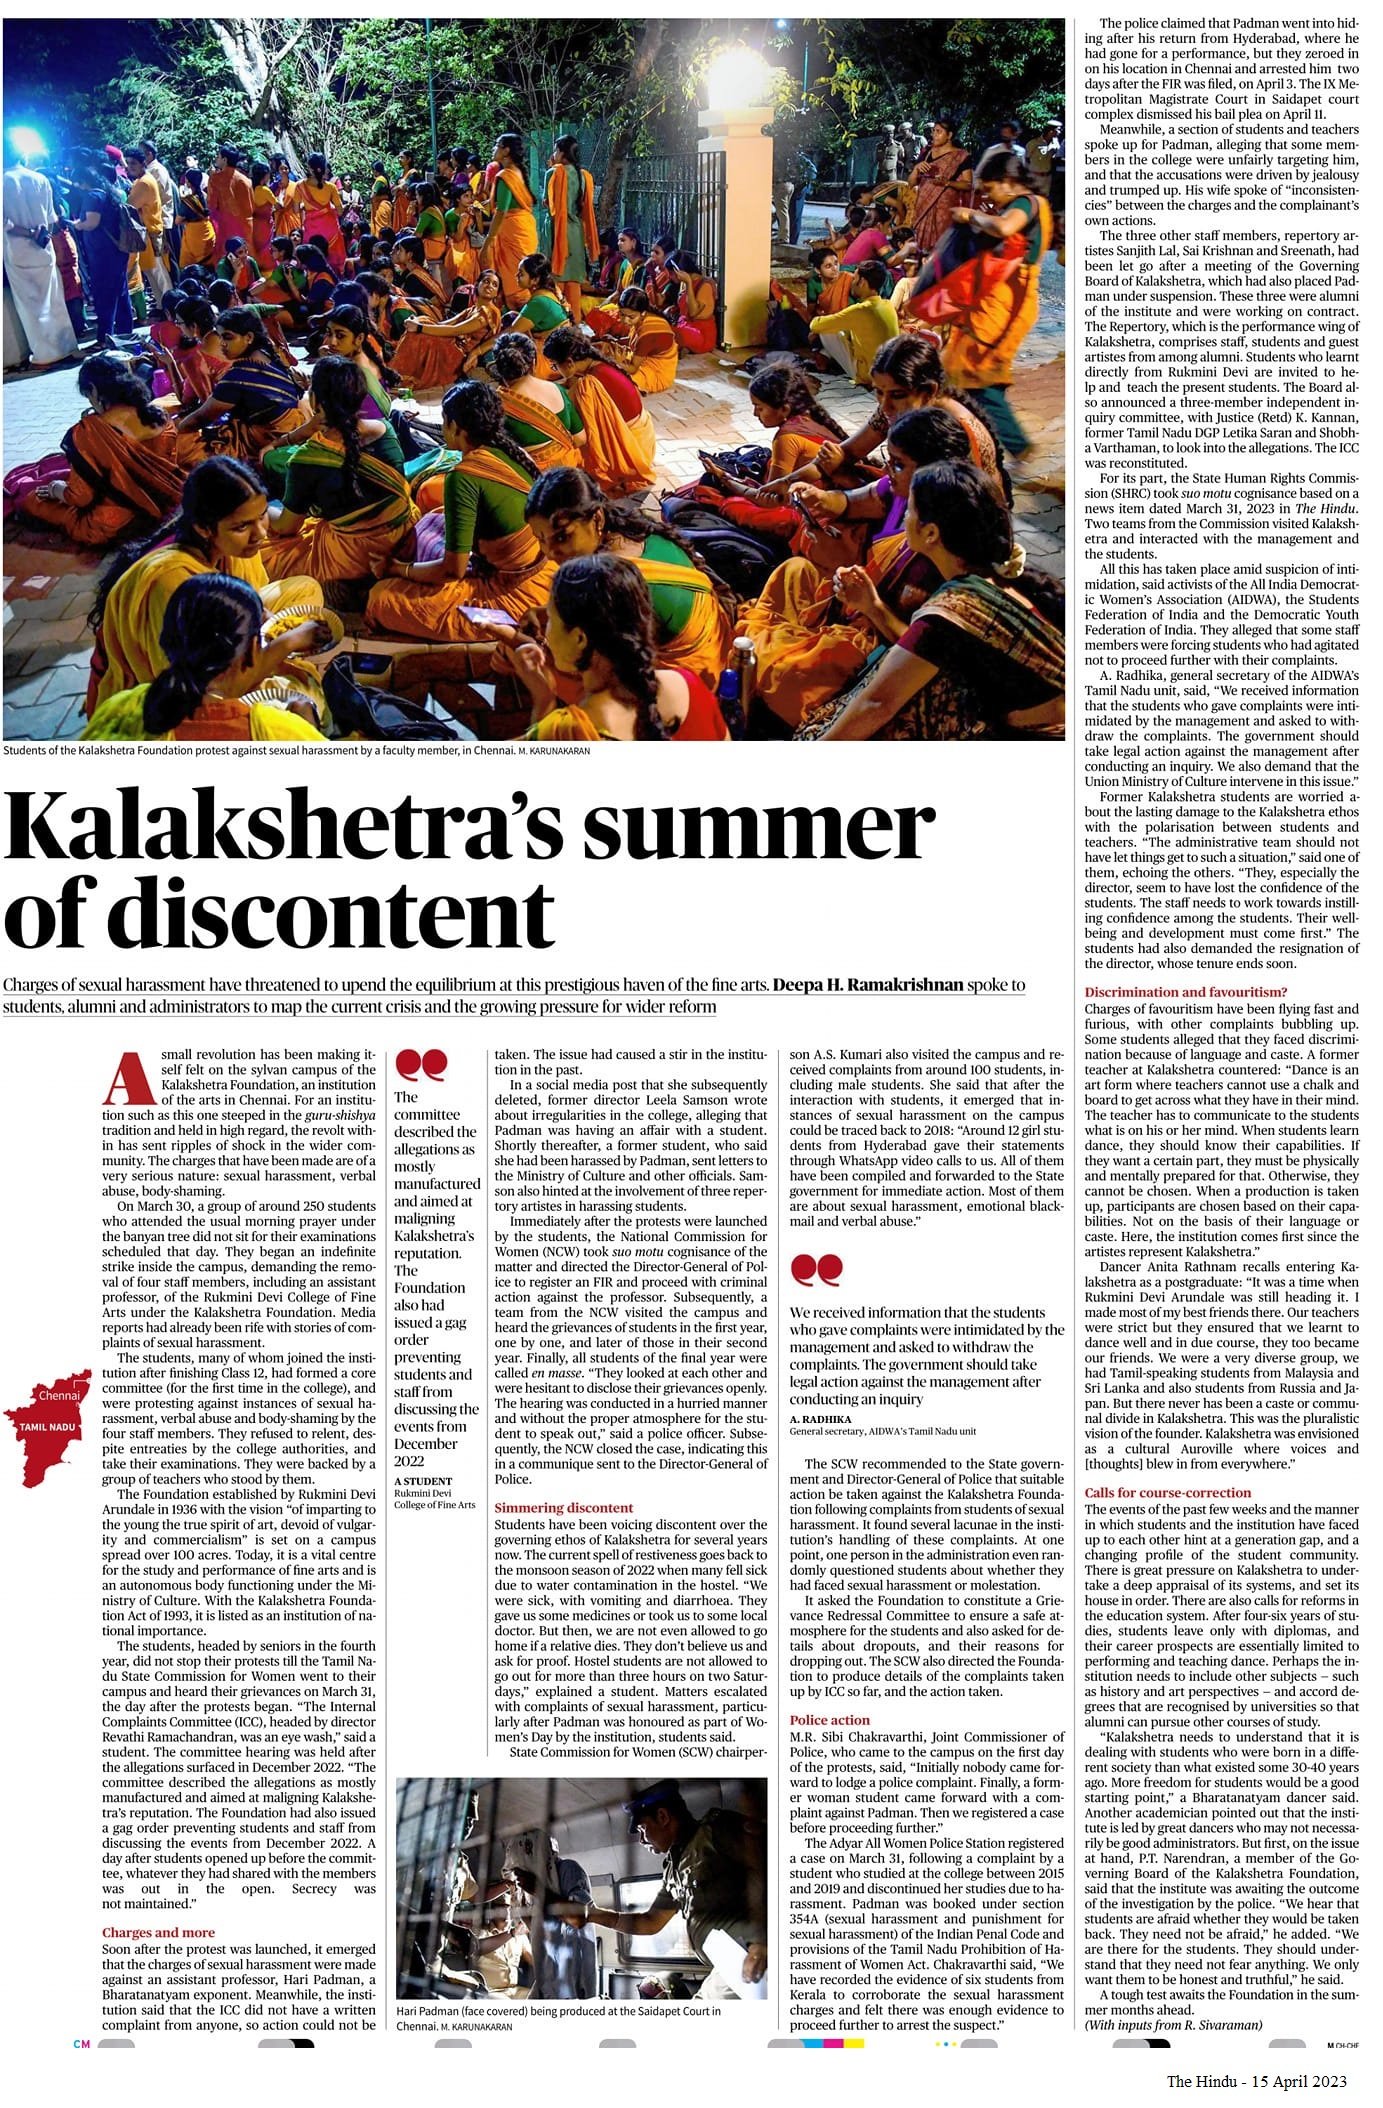 Kalakshetra's summer of discontent - Deepa H Ramakrishnan